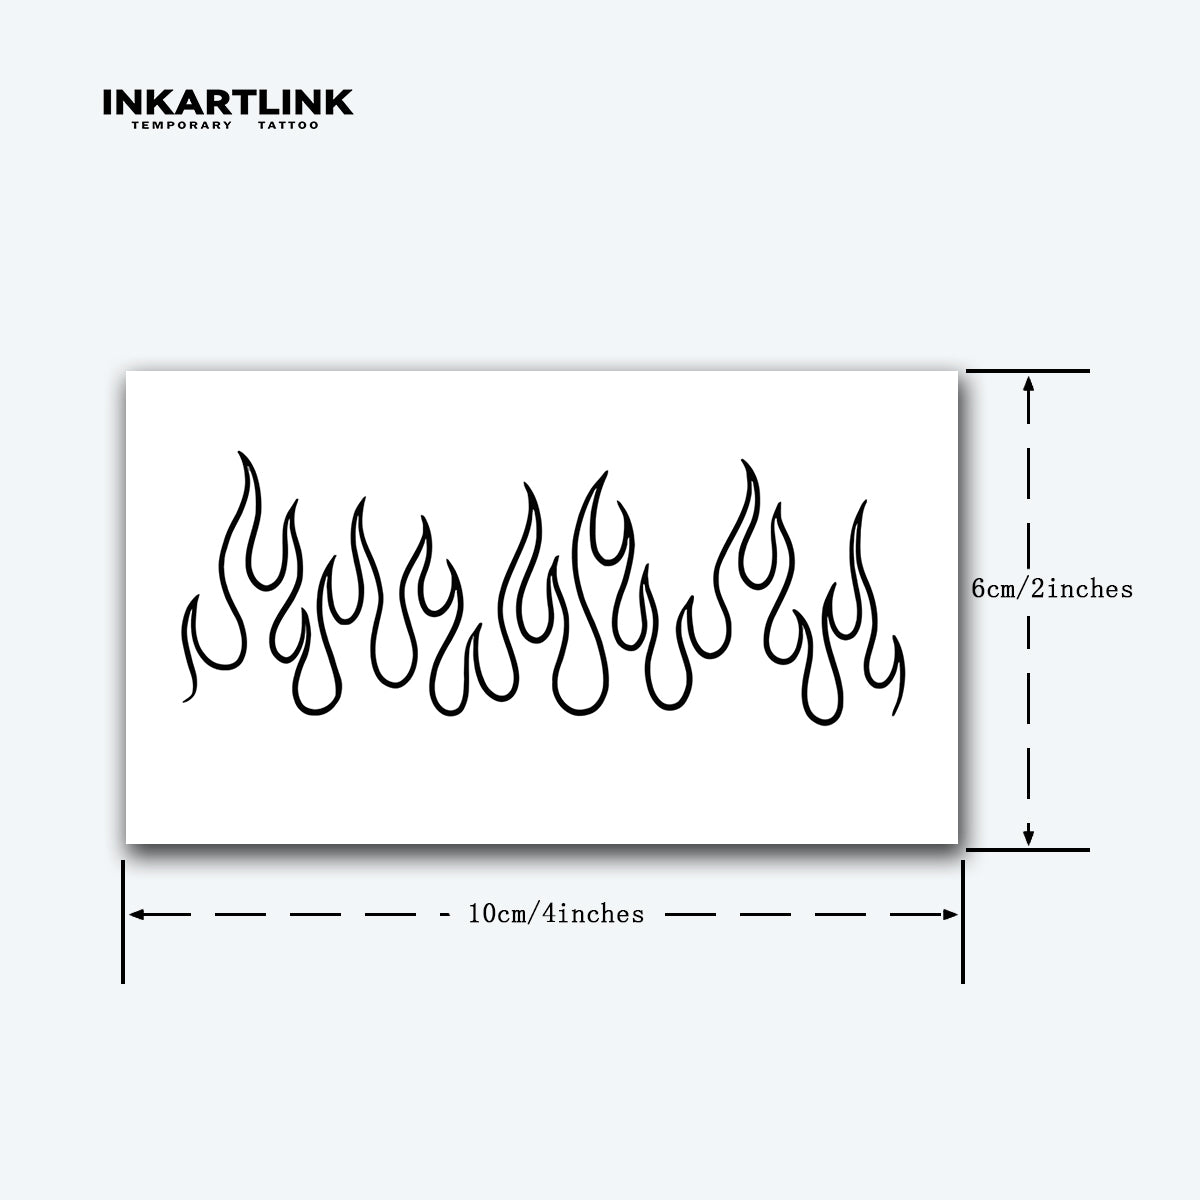 Fire Icon Engraving Clipart Sketch Vecto Graphic by IrynaShancheva ·  Creative Fabrica